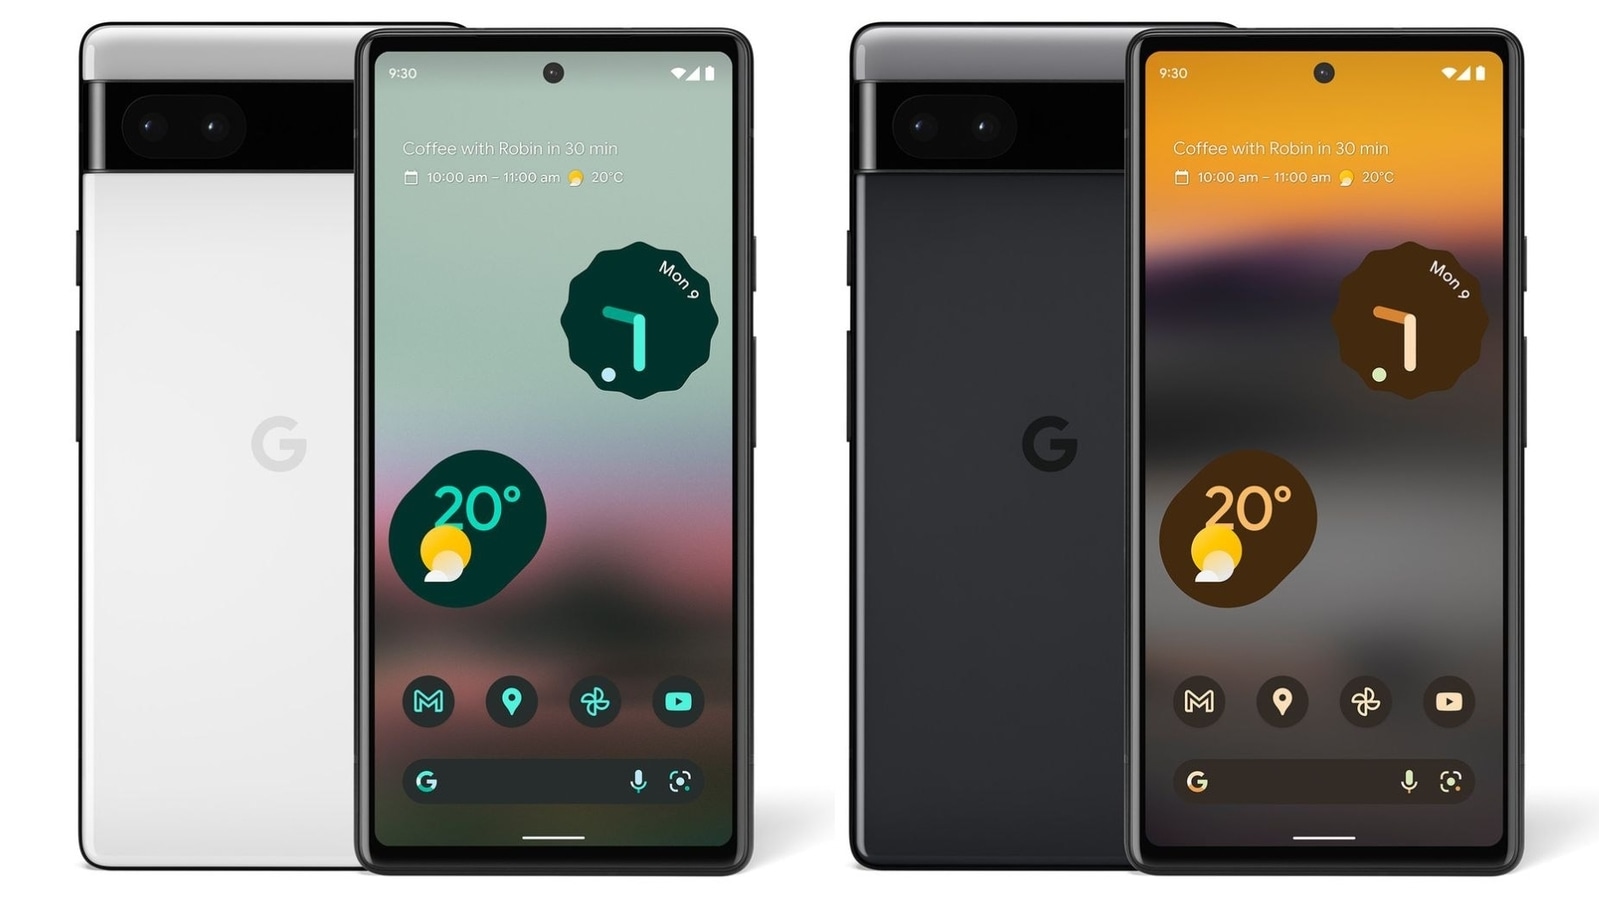 Google Pixel 6a smartphone has its first software update. Details